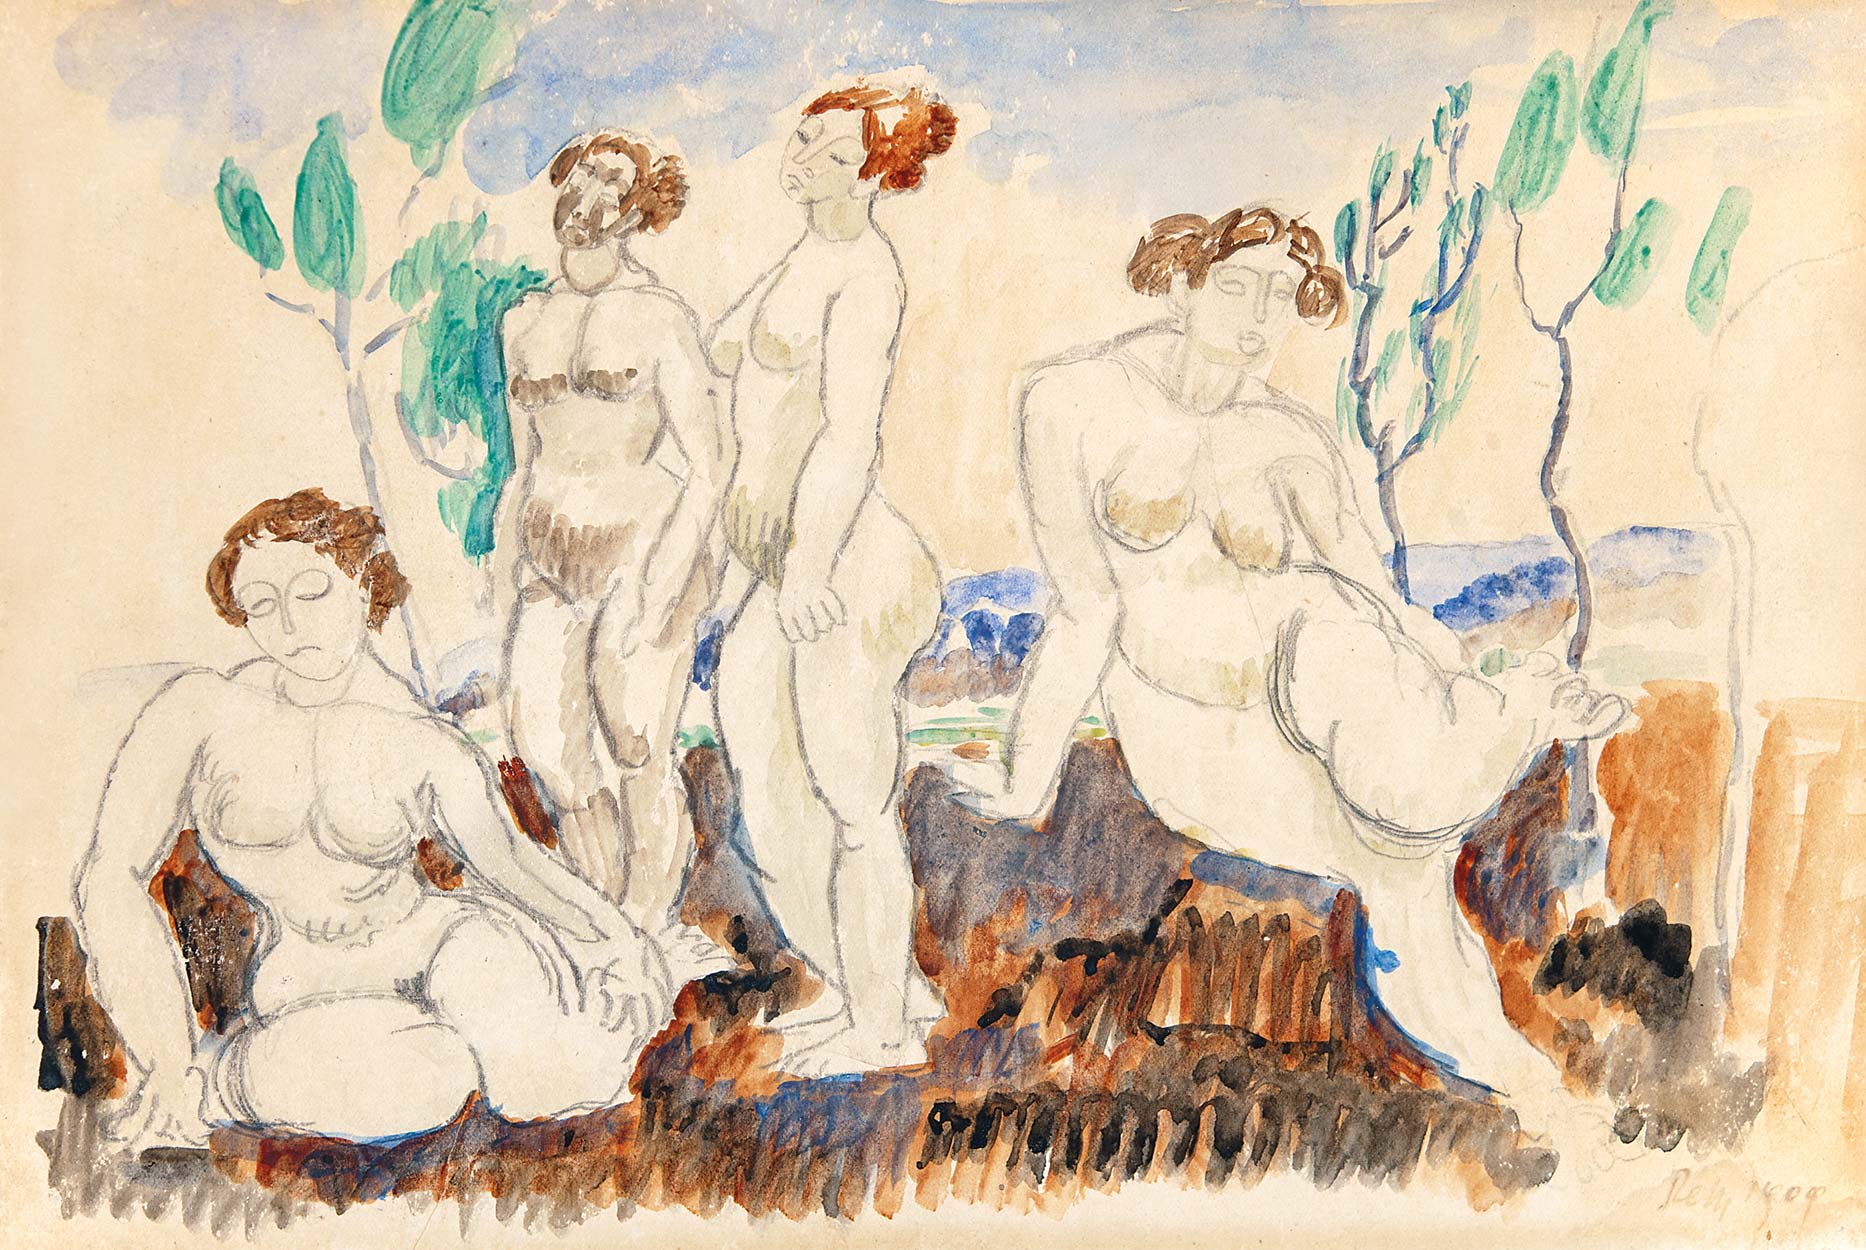 Réth Alfréd (1884-1966) Nudes in the Forest, 1909